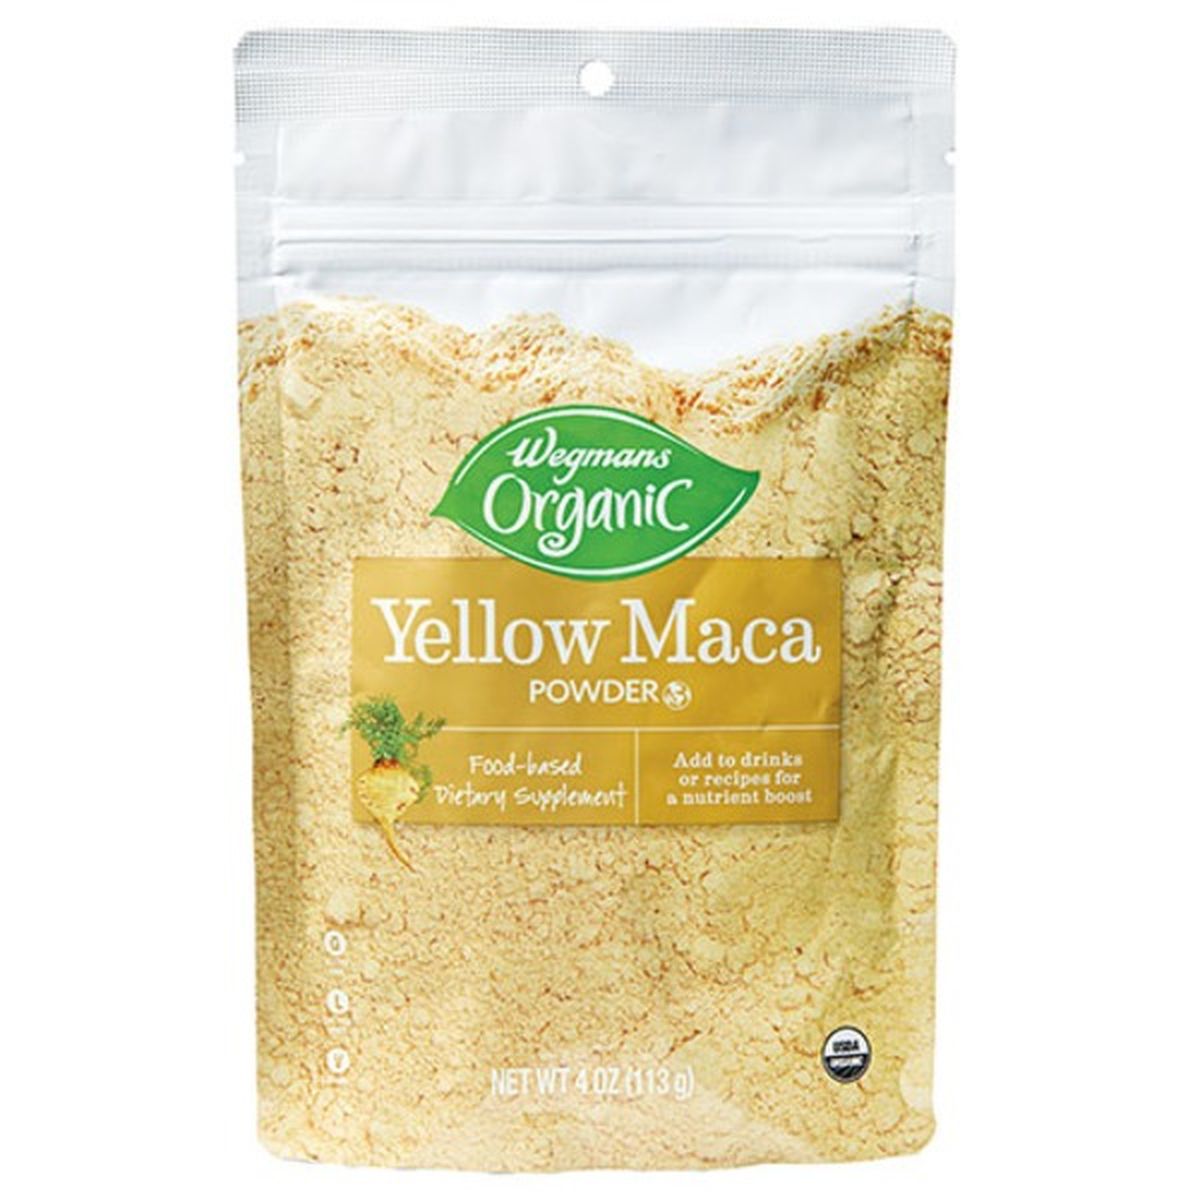 Calories in Wegmans Organic Yellow Maca Powder